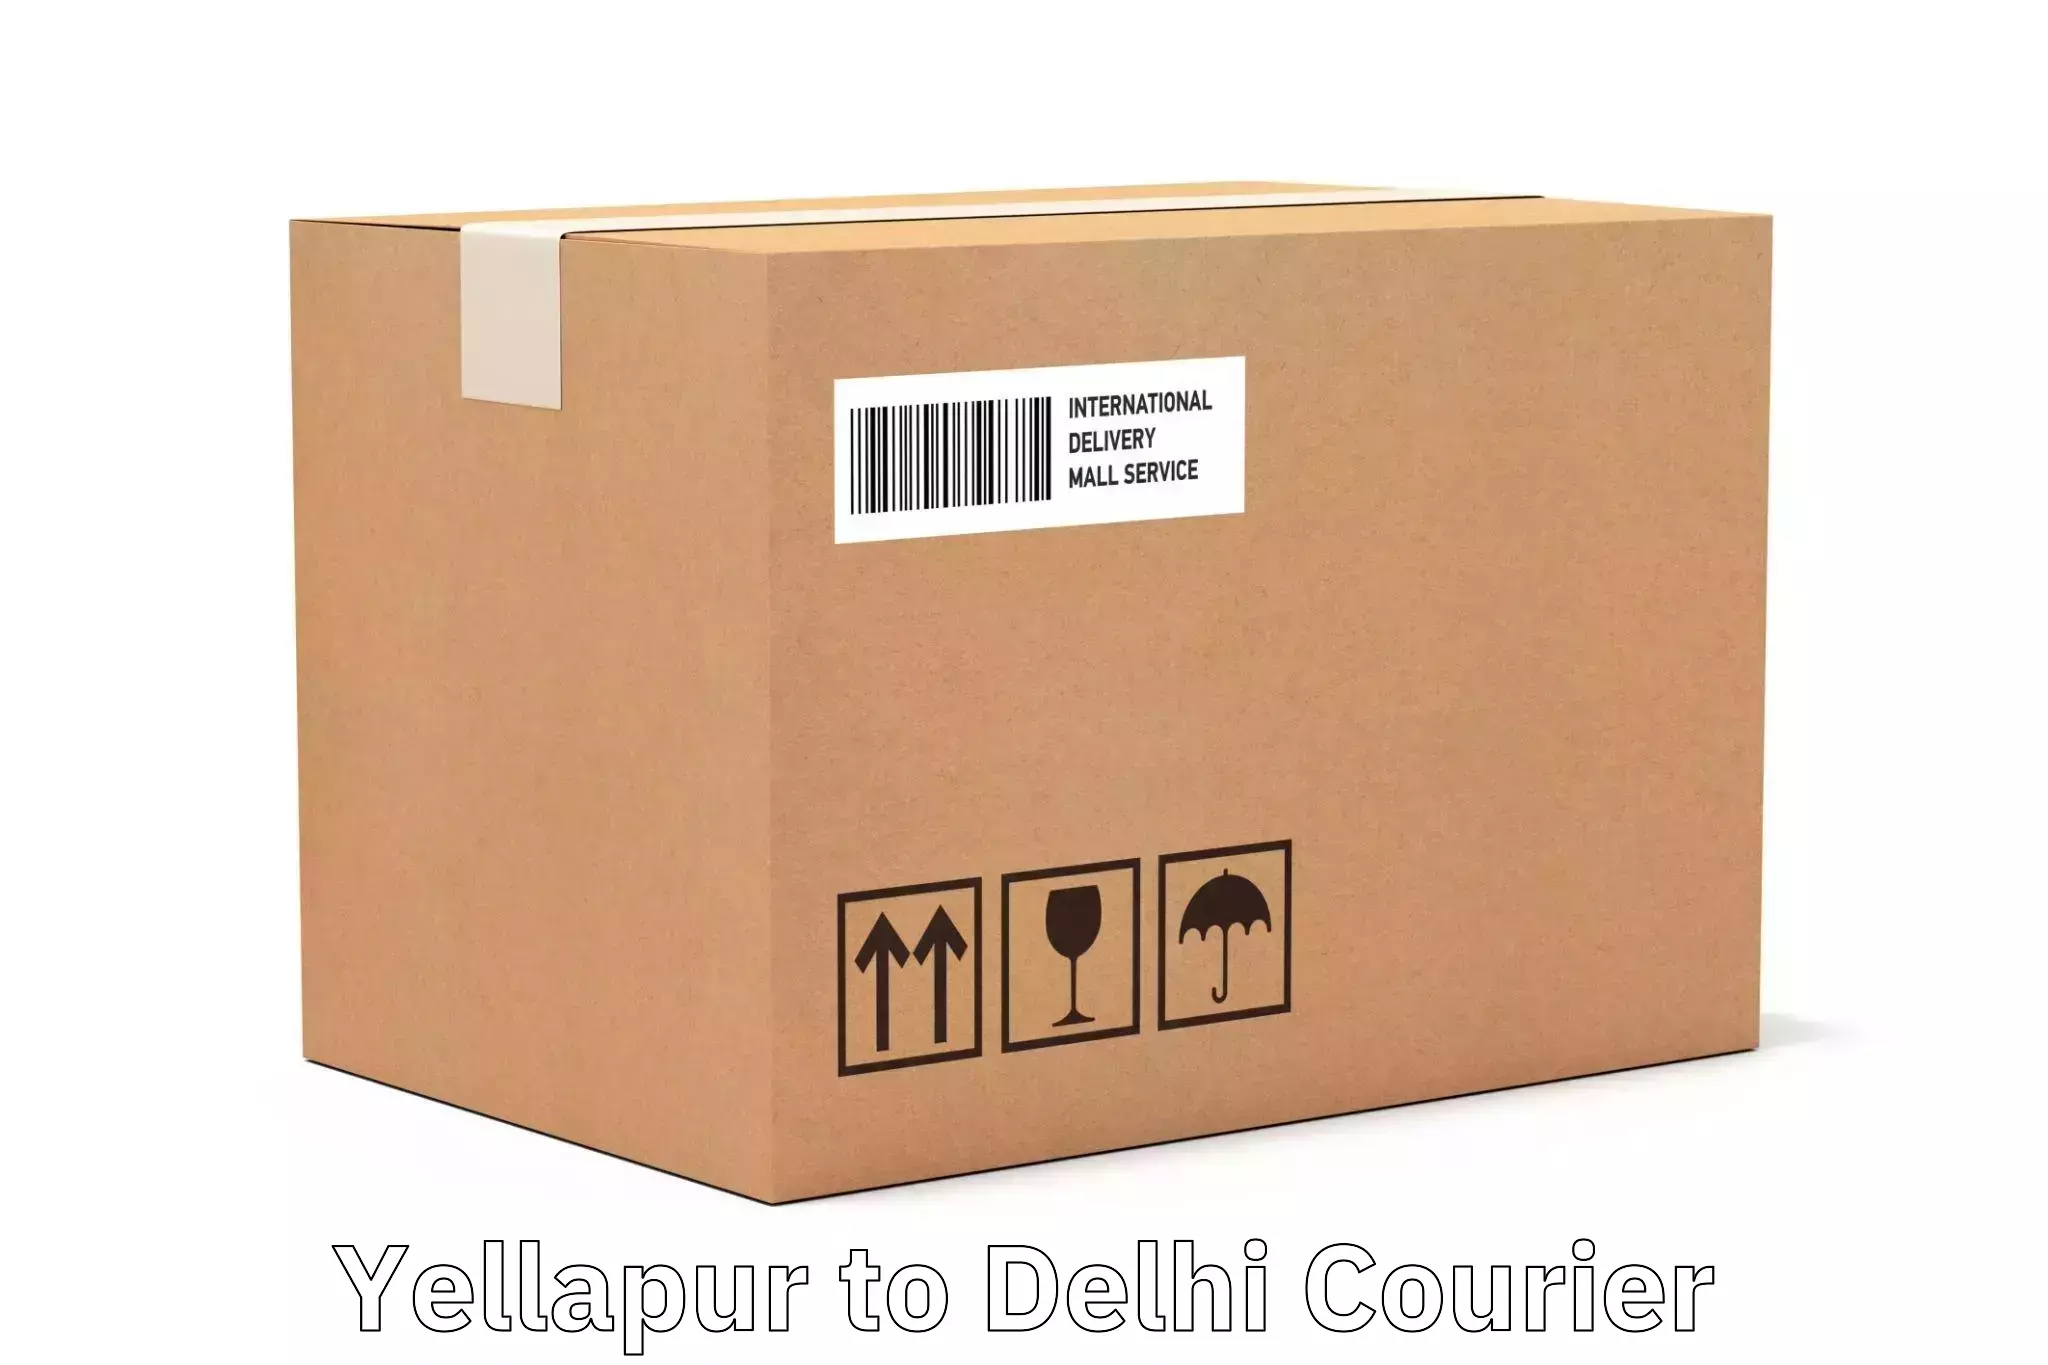 Express delivery capabilities Yellapur to Jawaharlal Nehru University New Delhi